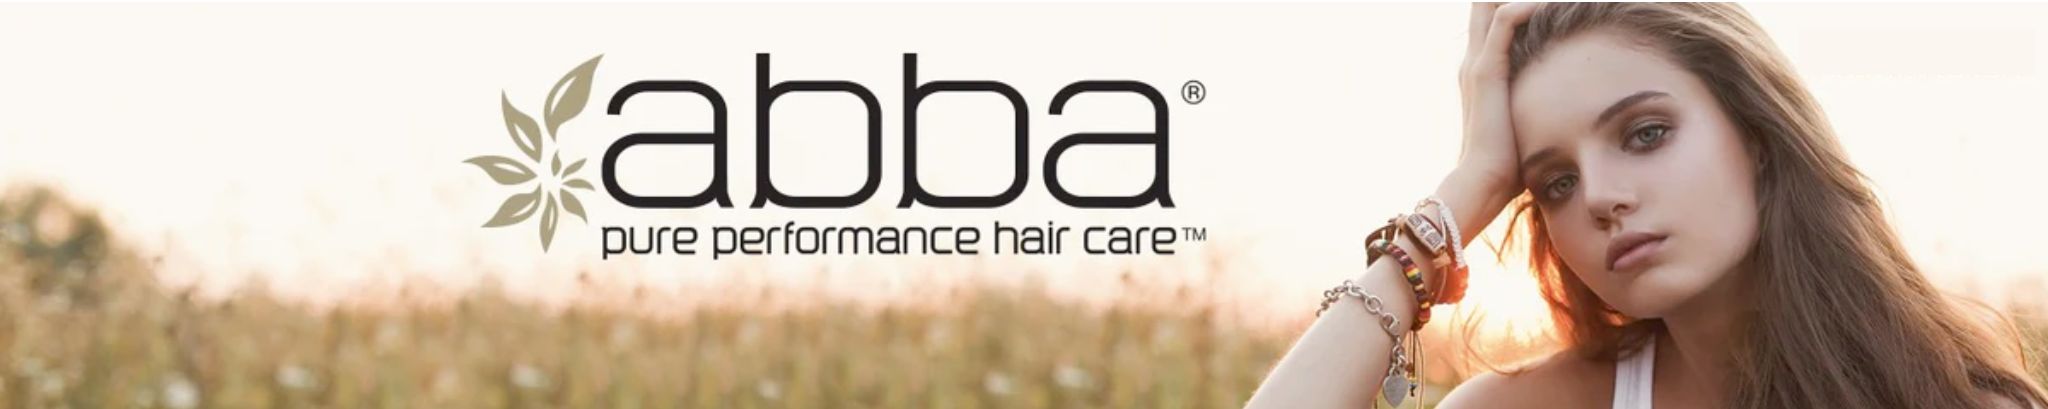 abba pure performance hair care | Fitaminat